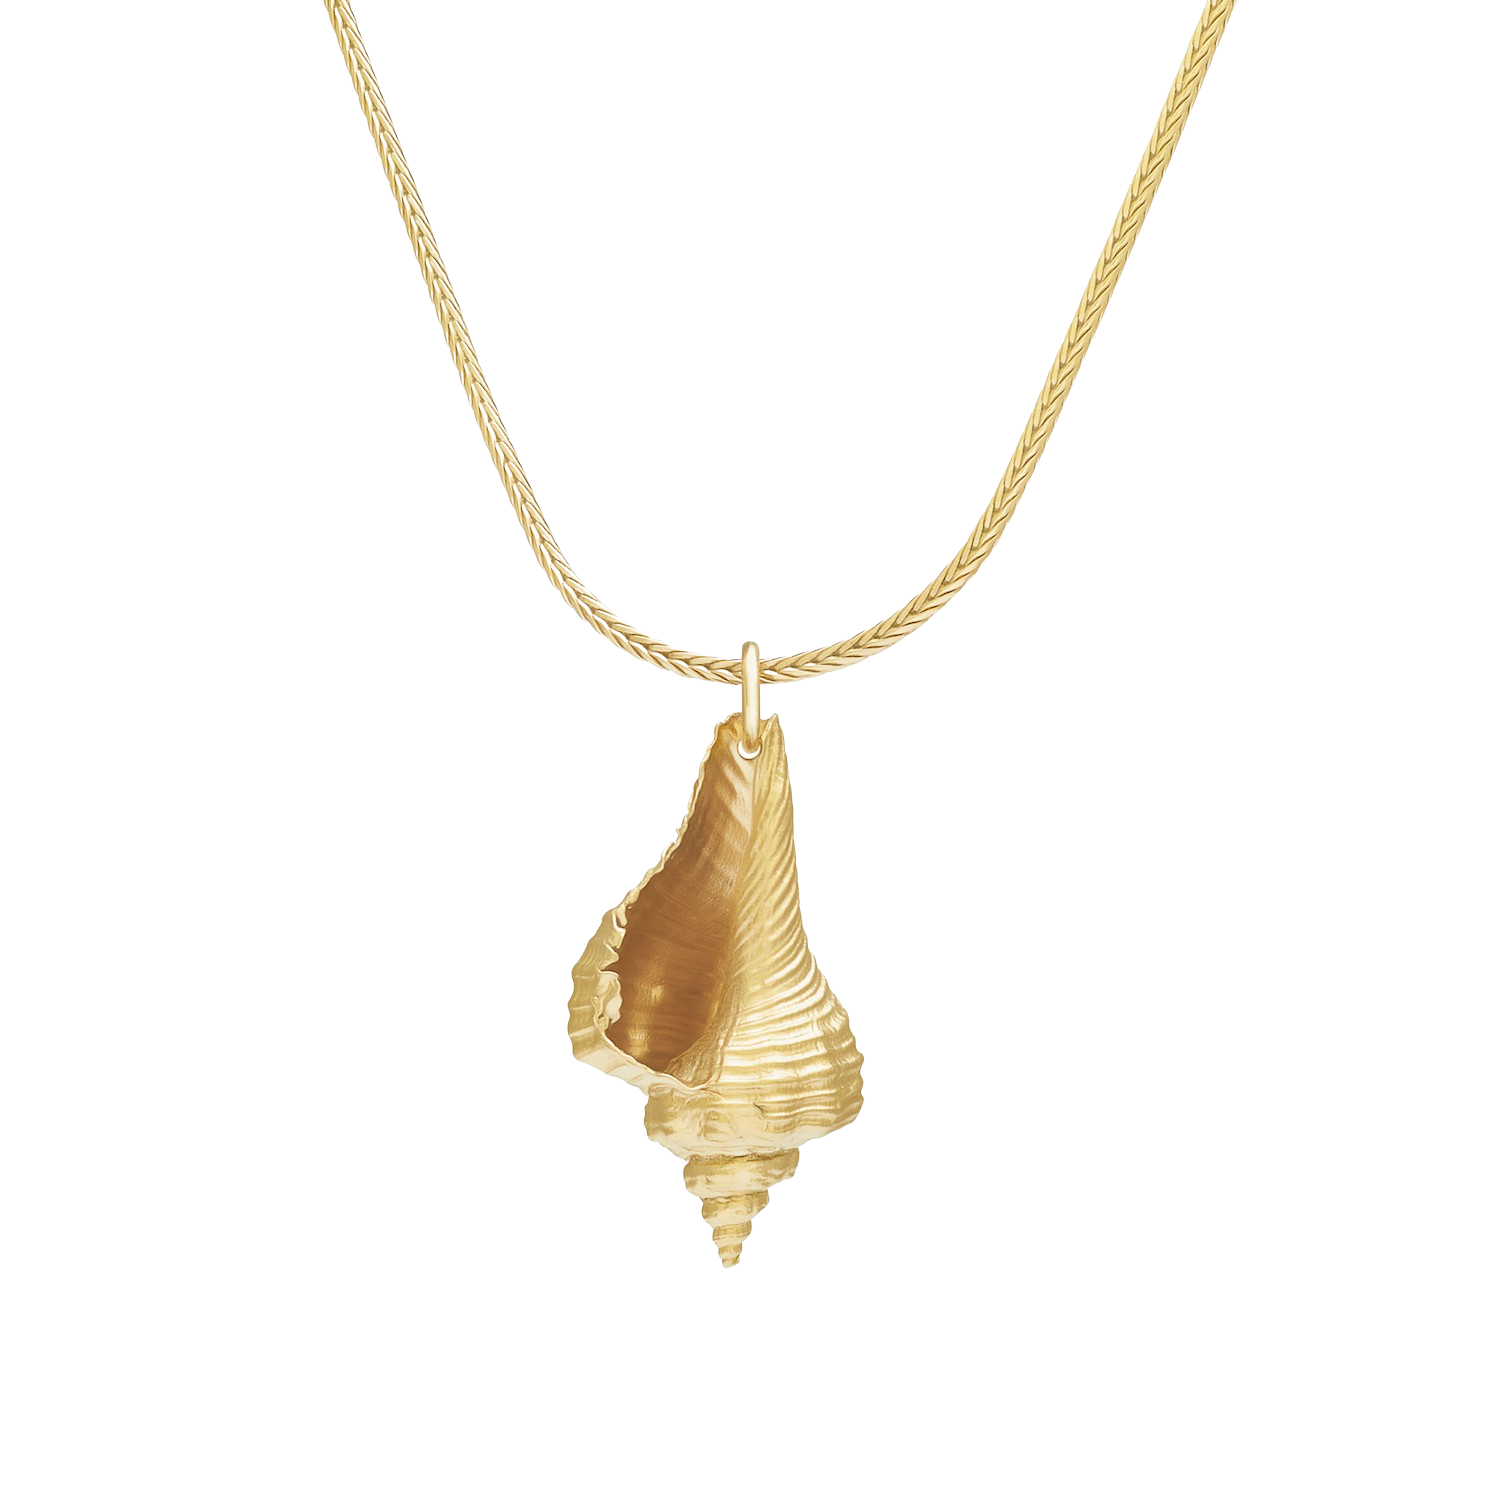 Praesidio Shell Necklace, Gold Vermeil. Co-Designer Christina Macpherson